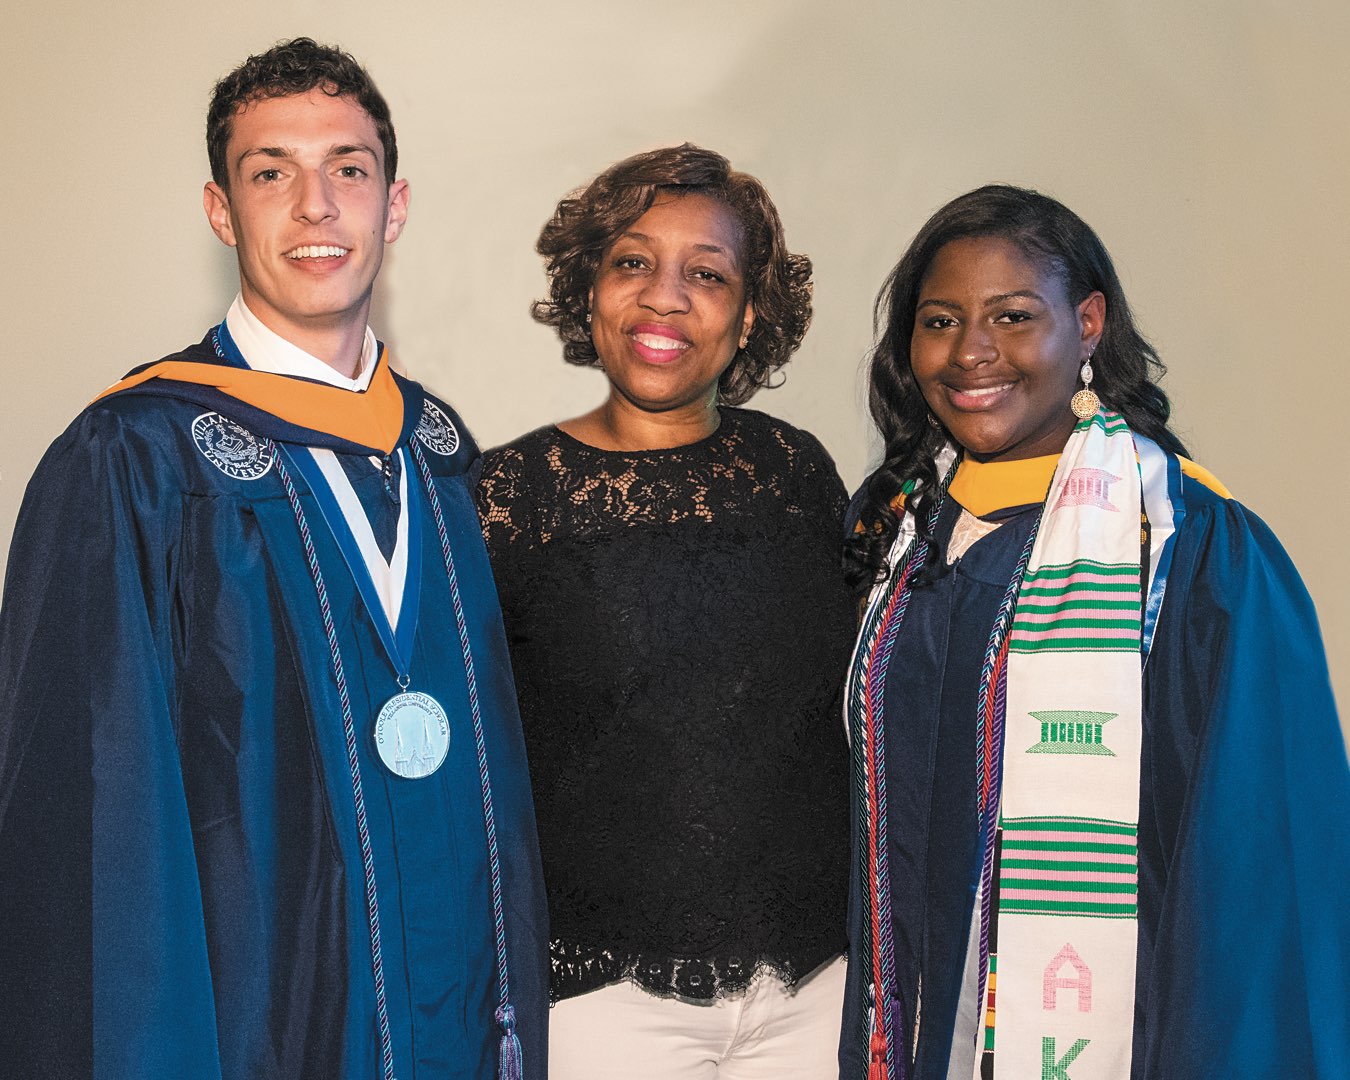 Recent graduates Alex Alberti and Mafatta Janeh in regalia with mentor and O’Toole Scholar Committee Member Nicole Davis